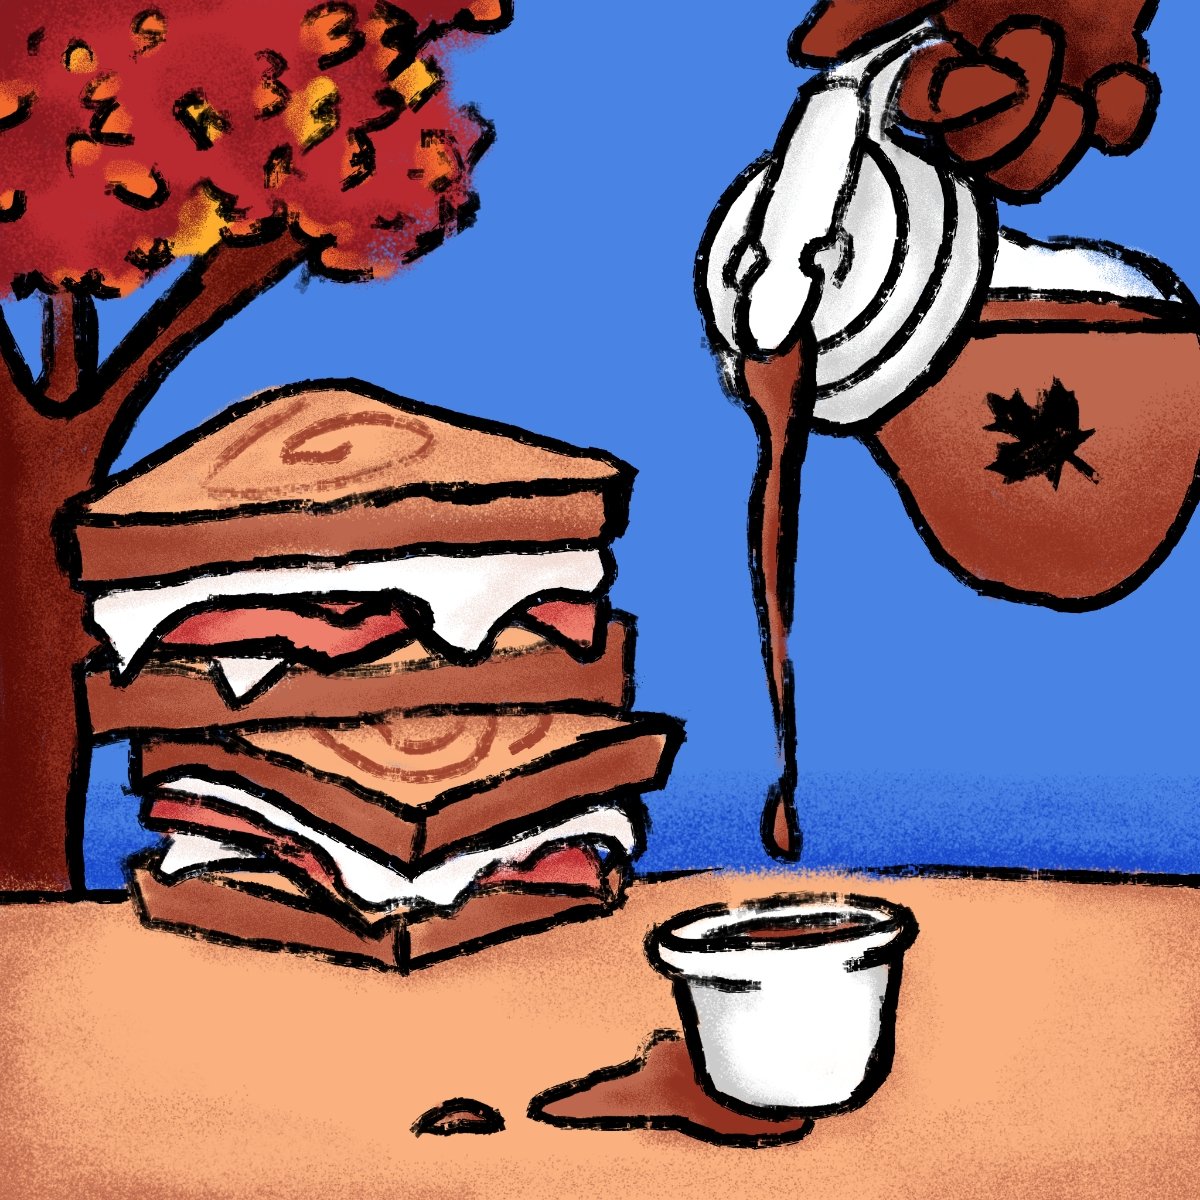 Monte Cristo sandwich illustration